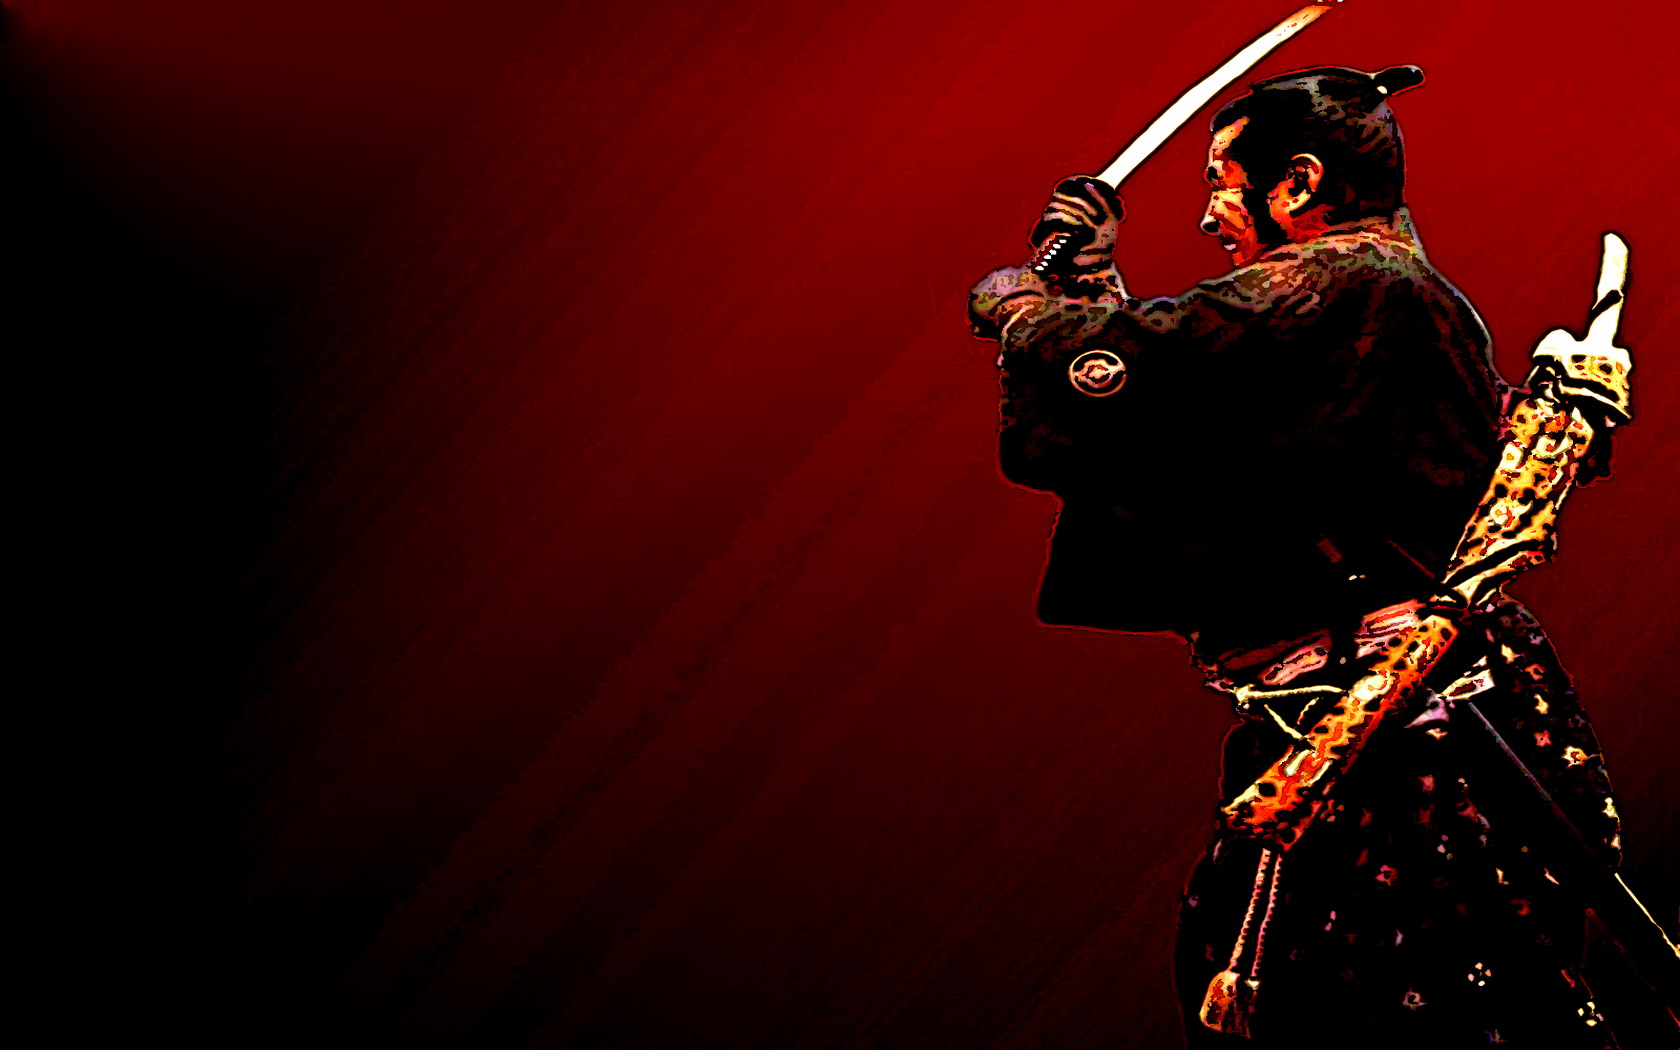 Samurai HD Wallpaper Background